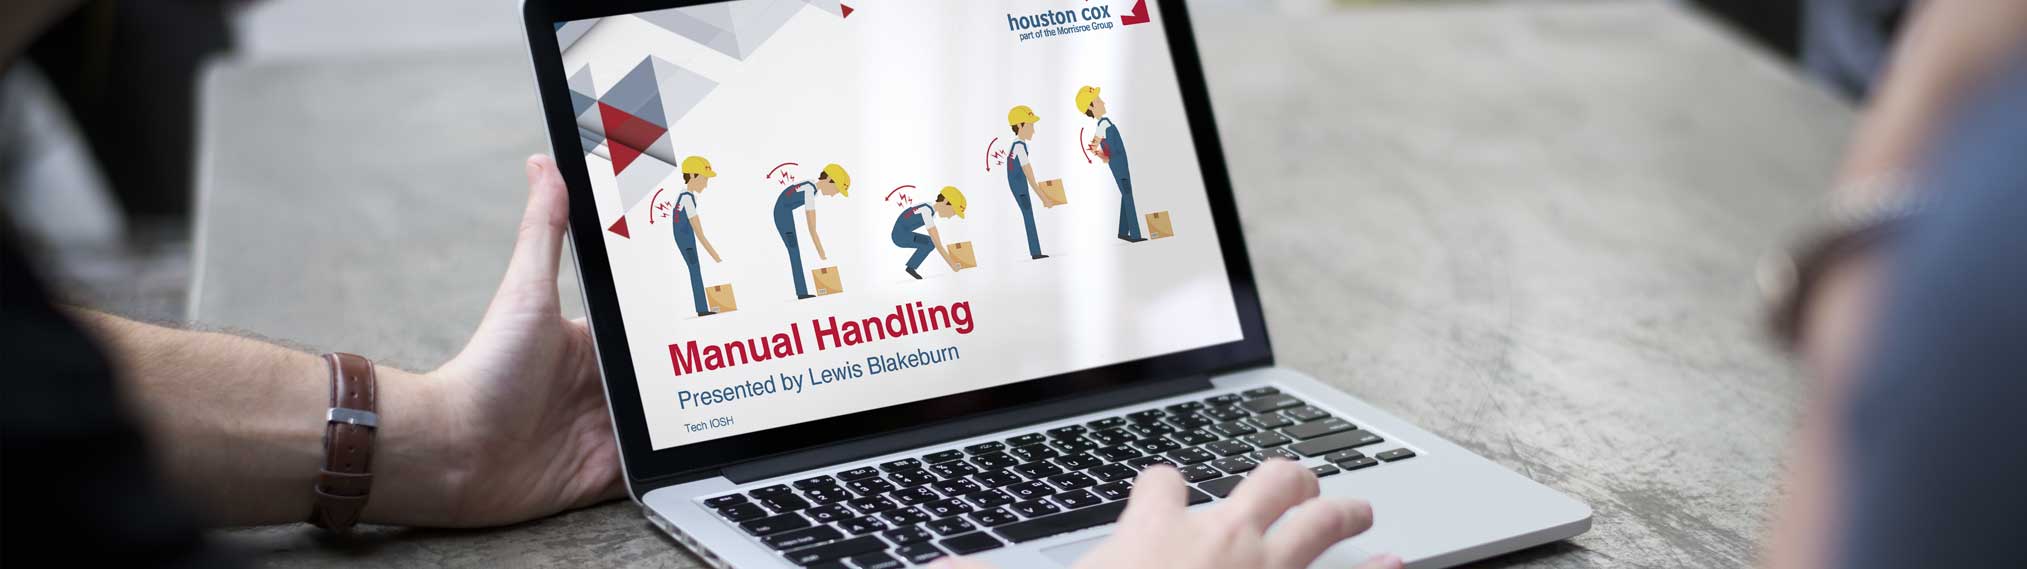 houston cox manual handling presentation